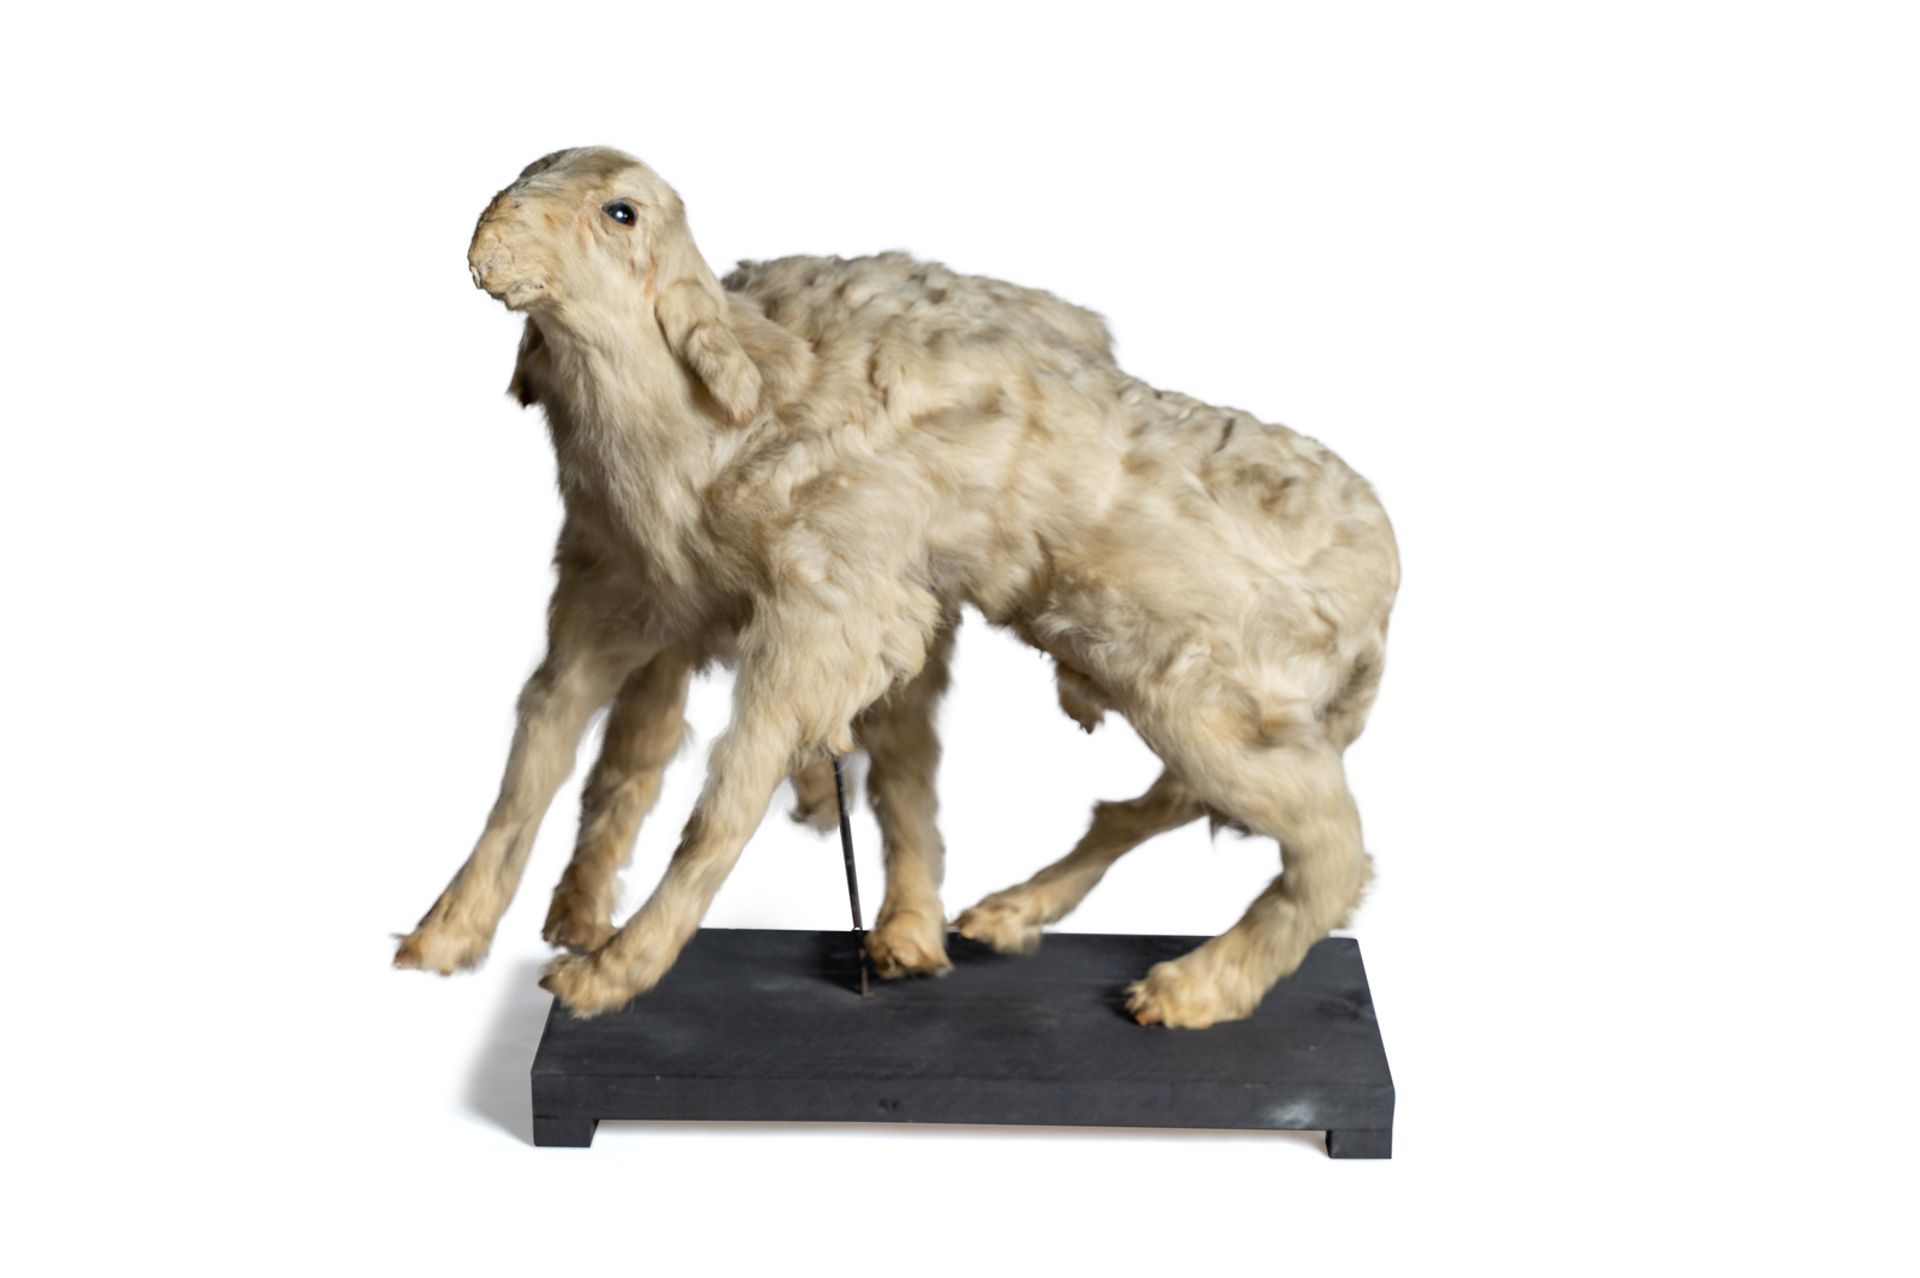 Deformed stuffed lamb. England, early 20th century.